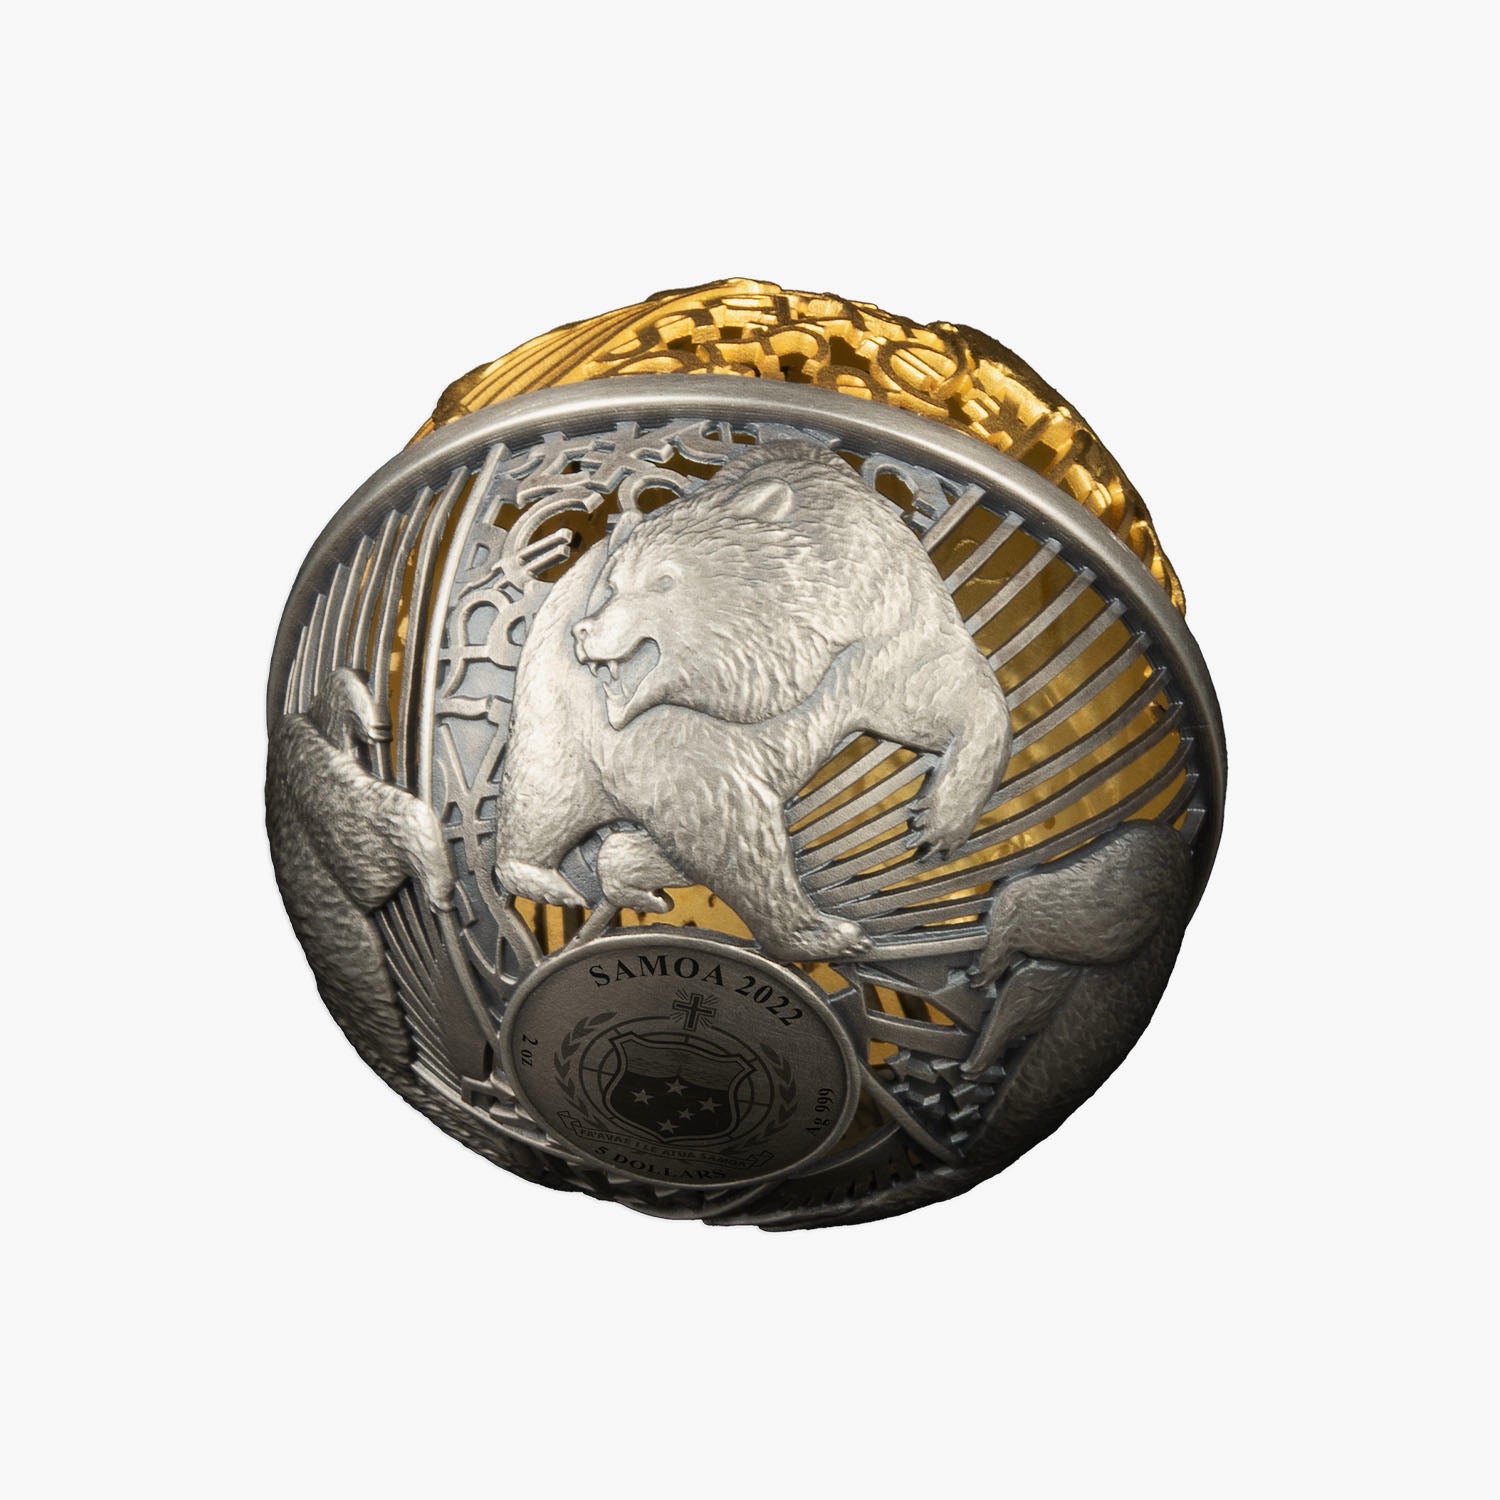 Bull & Bear Spherical 2oz Silver Coin